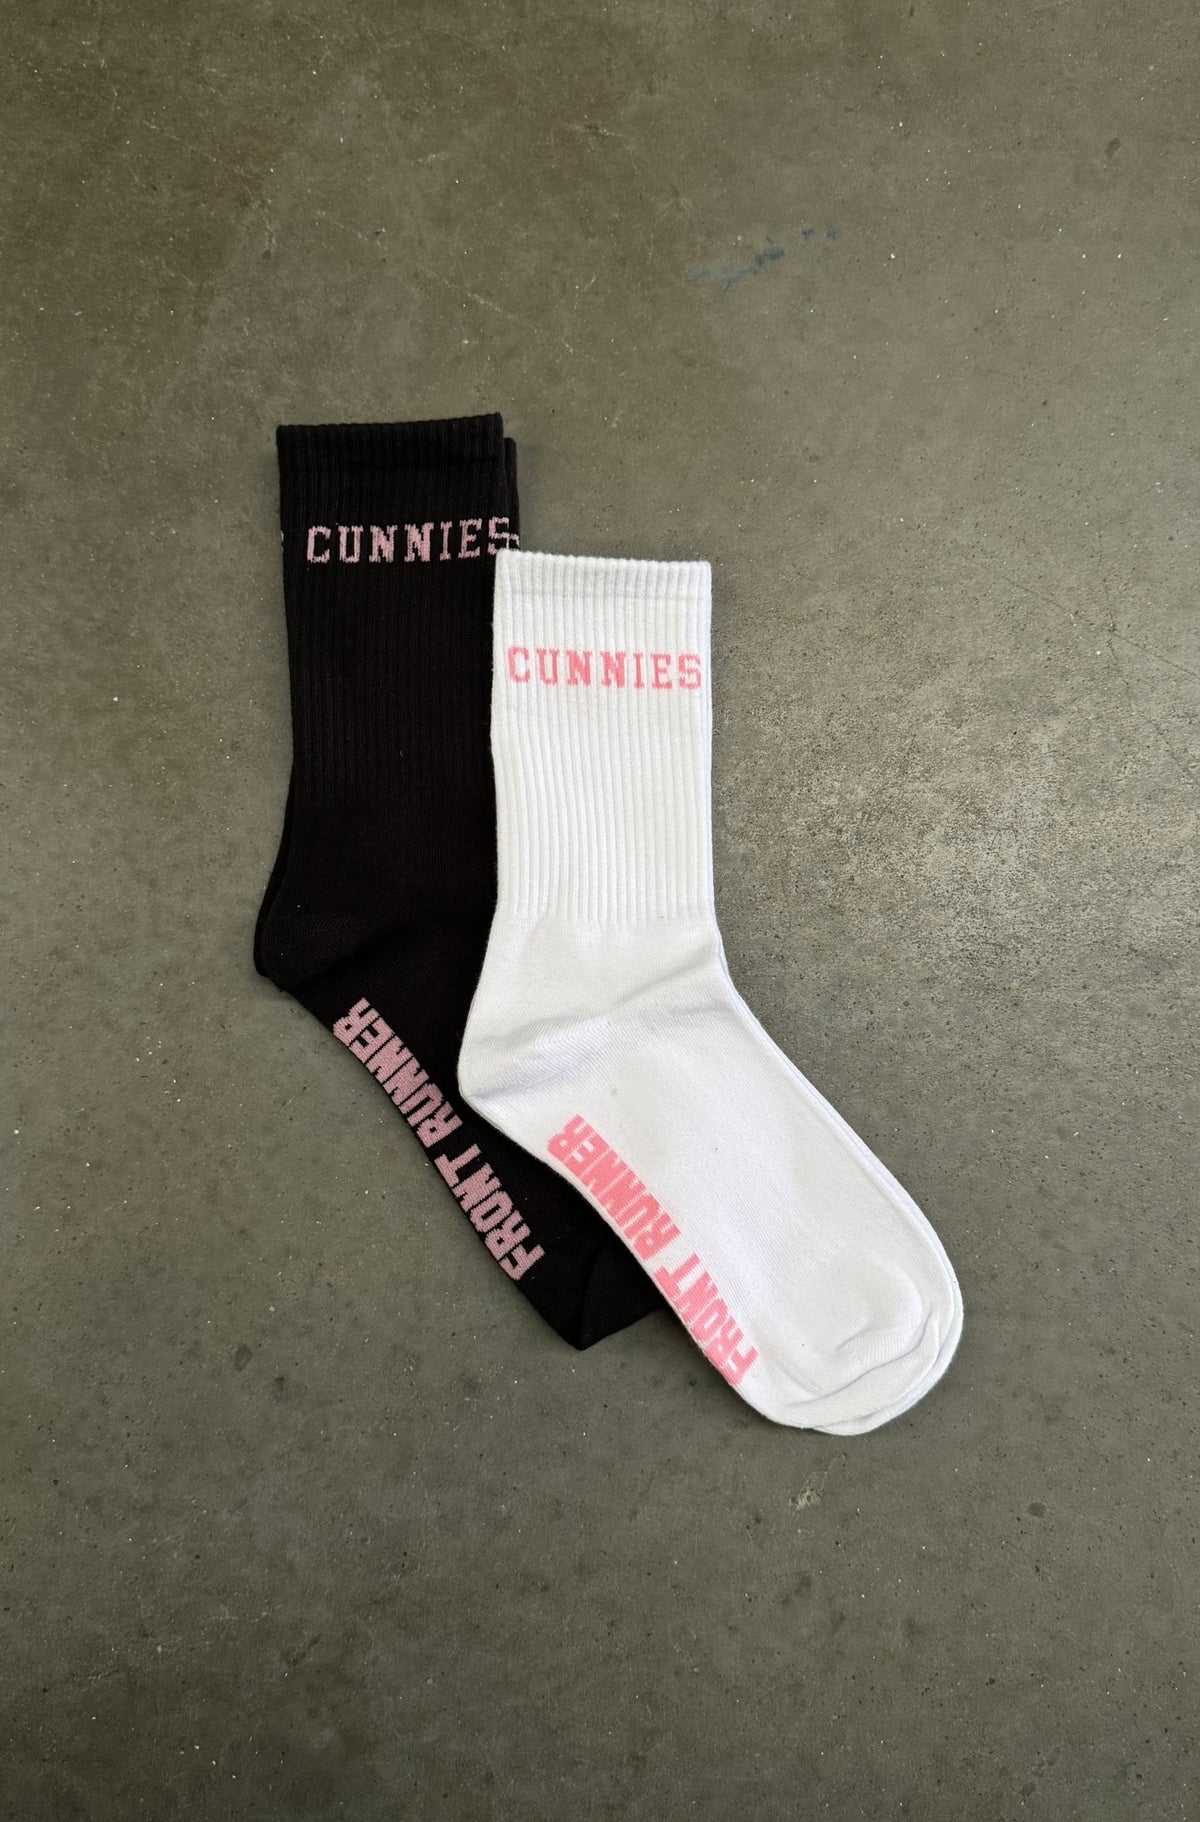 Cunnies Crew Socks - Candy